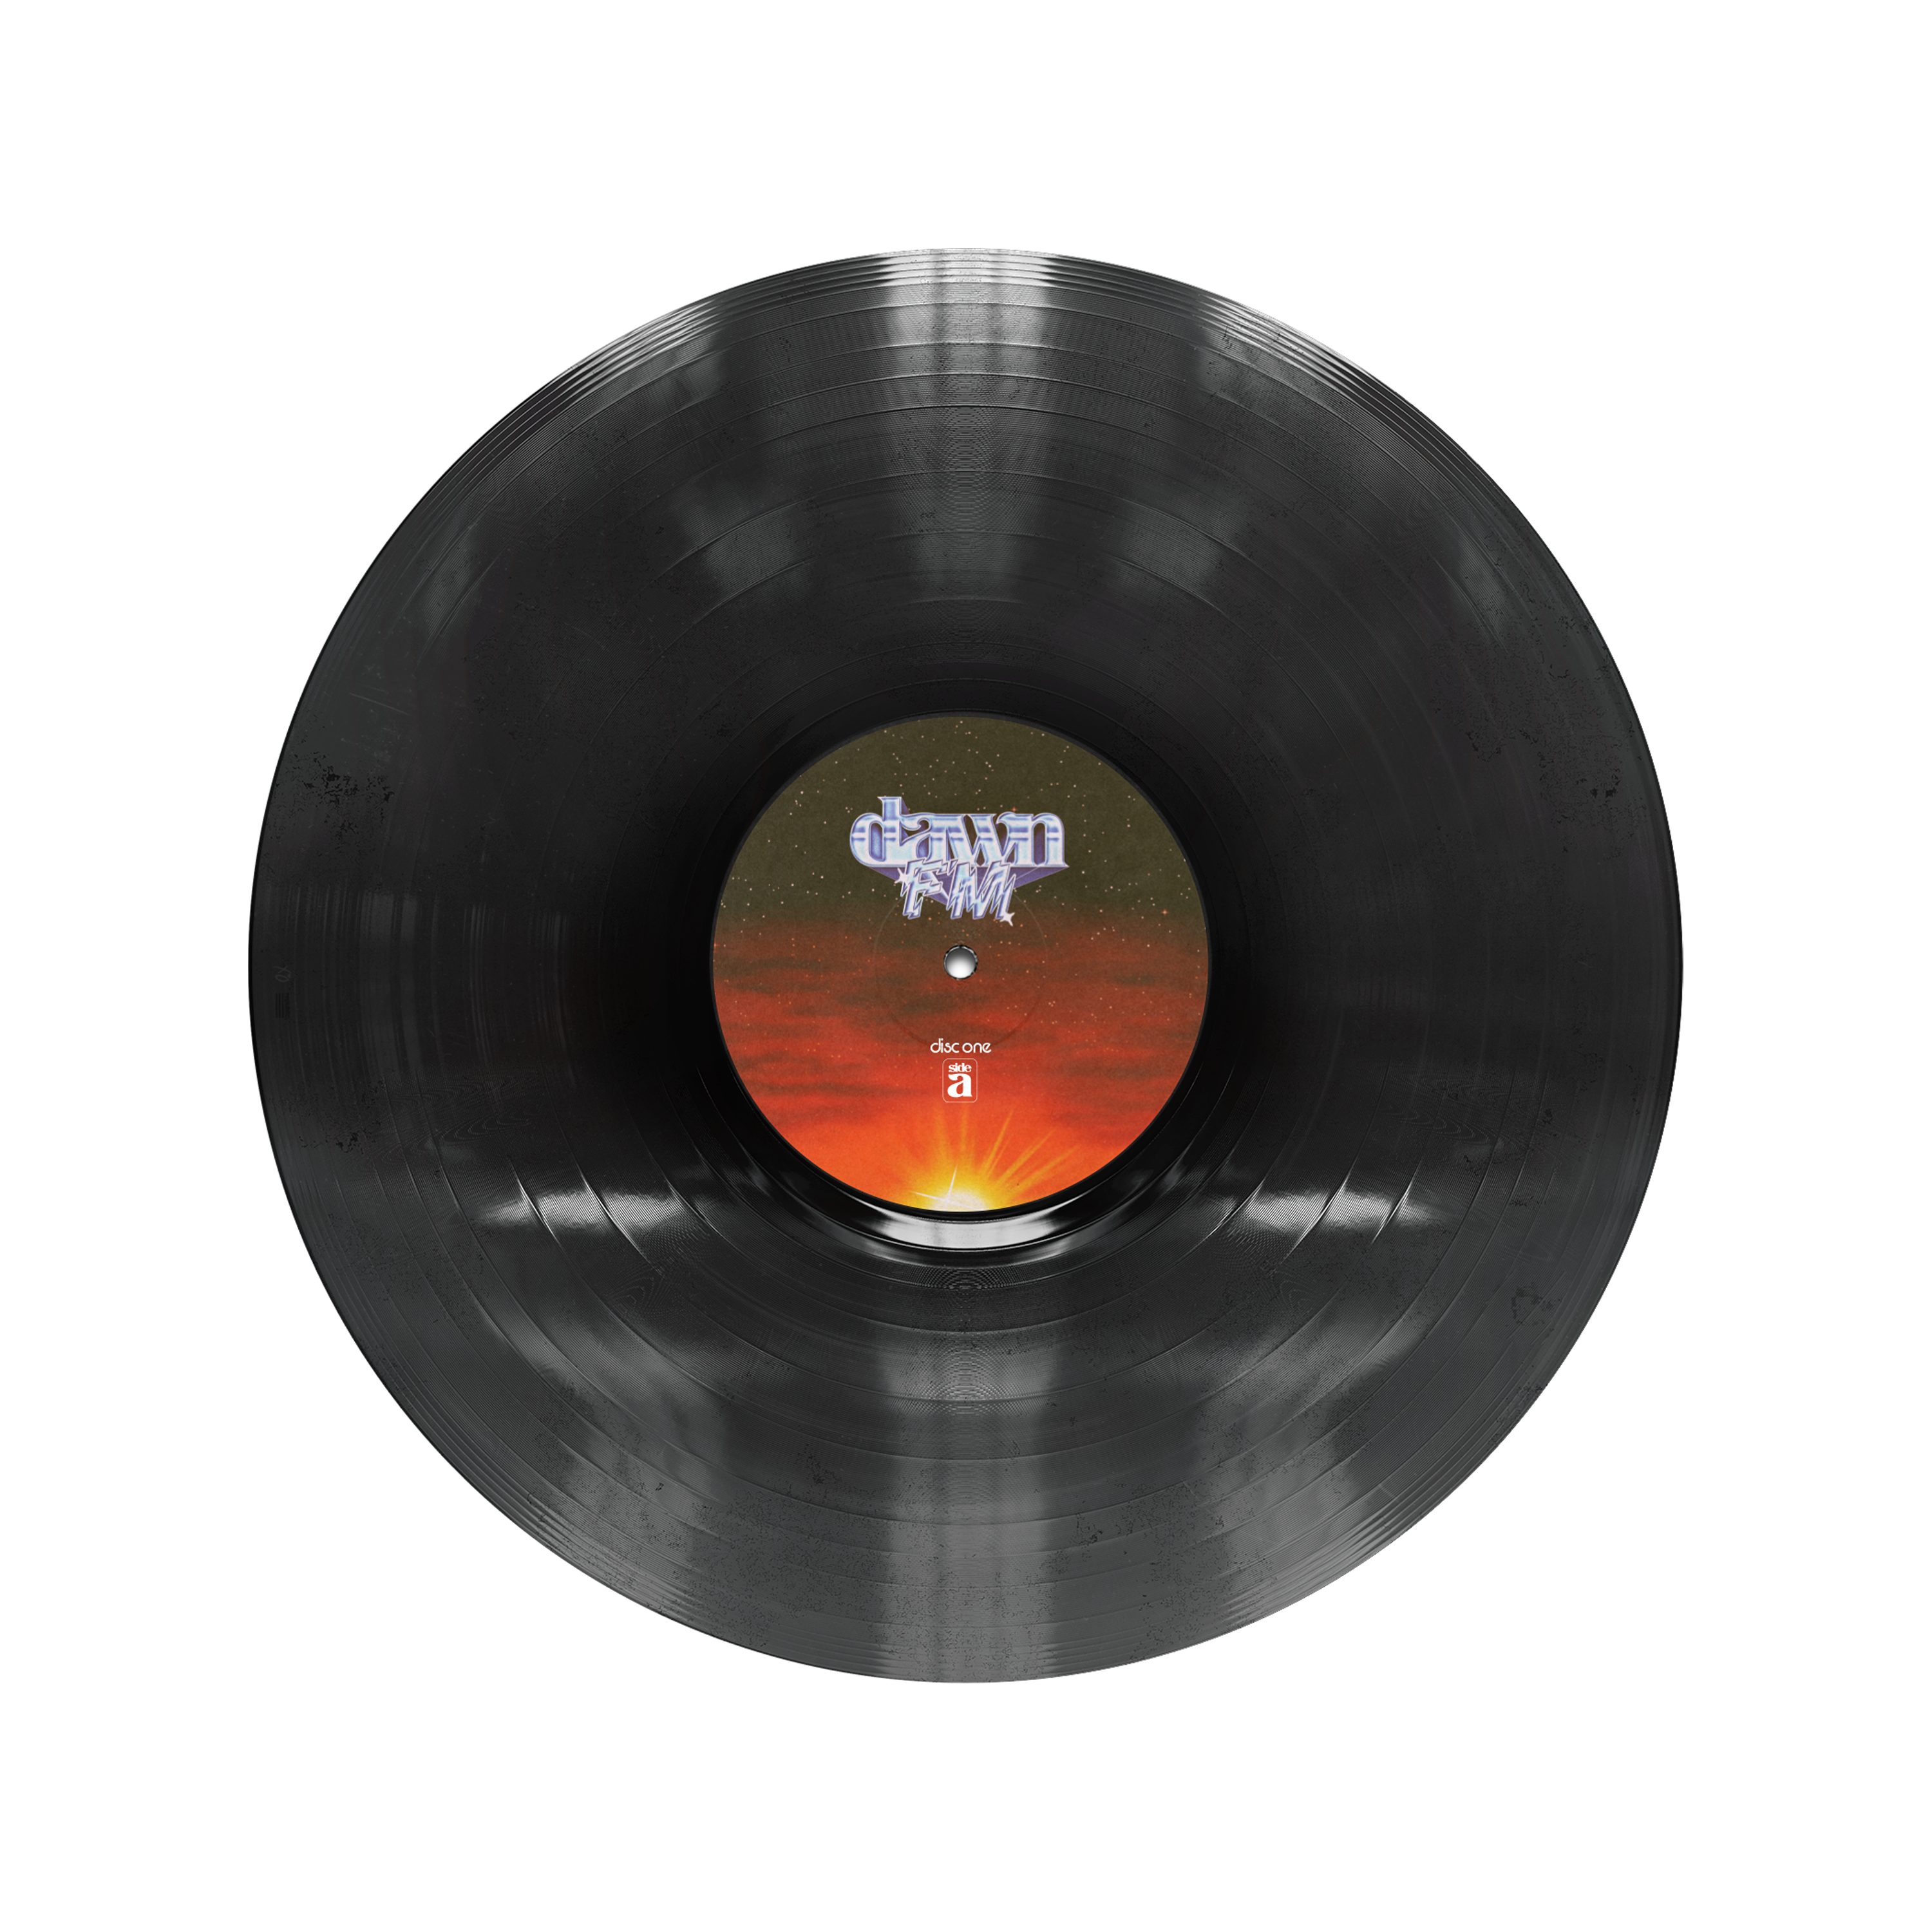 The Weeknd - DAWN FM (Collector's Edition 01): Vinyl 2LP